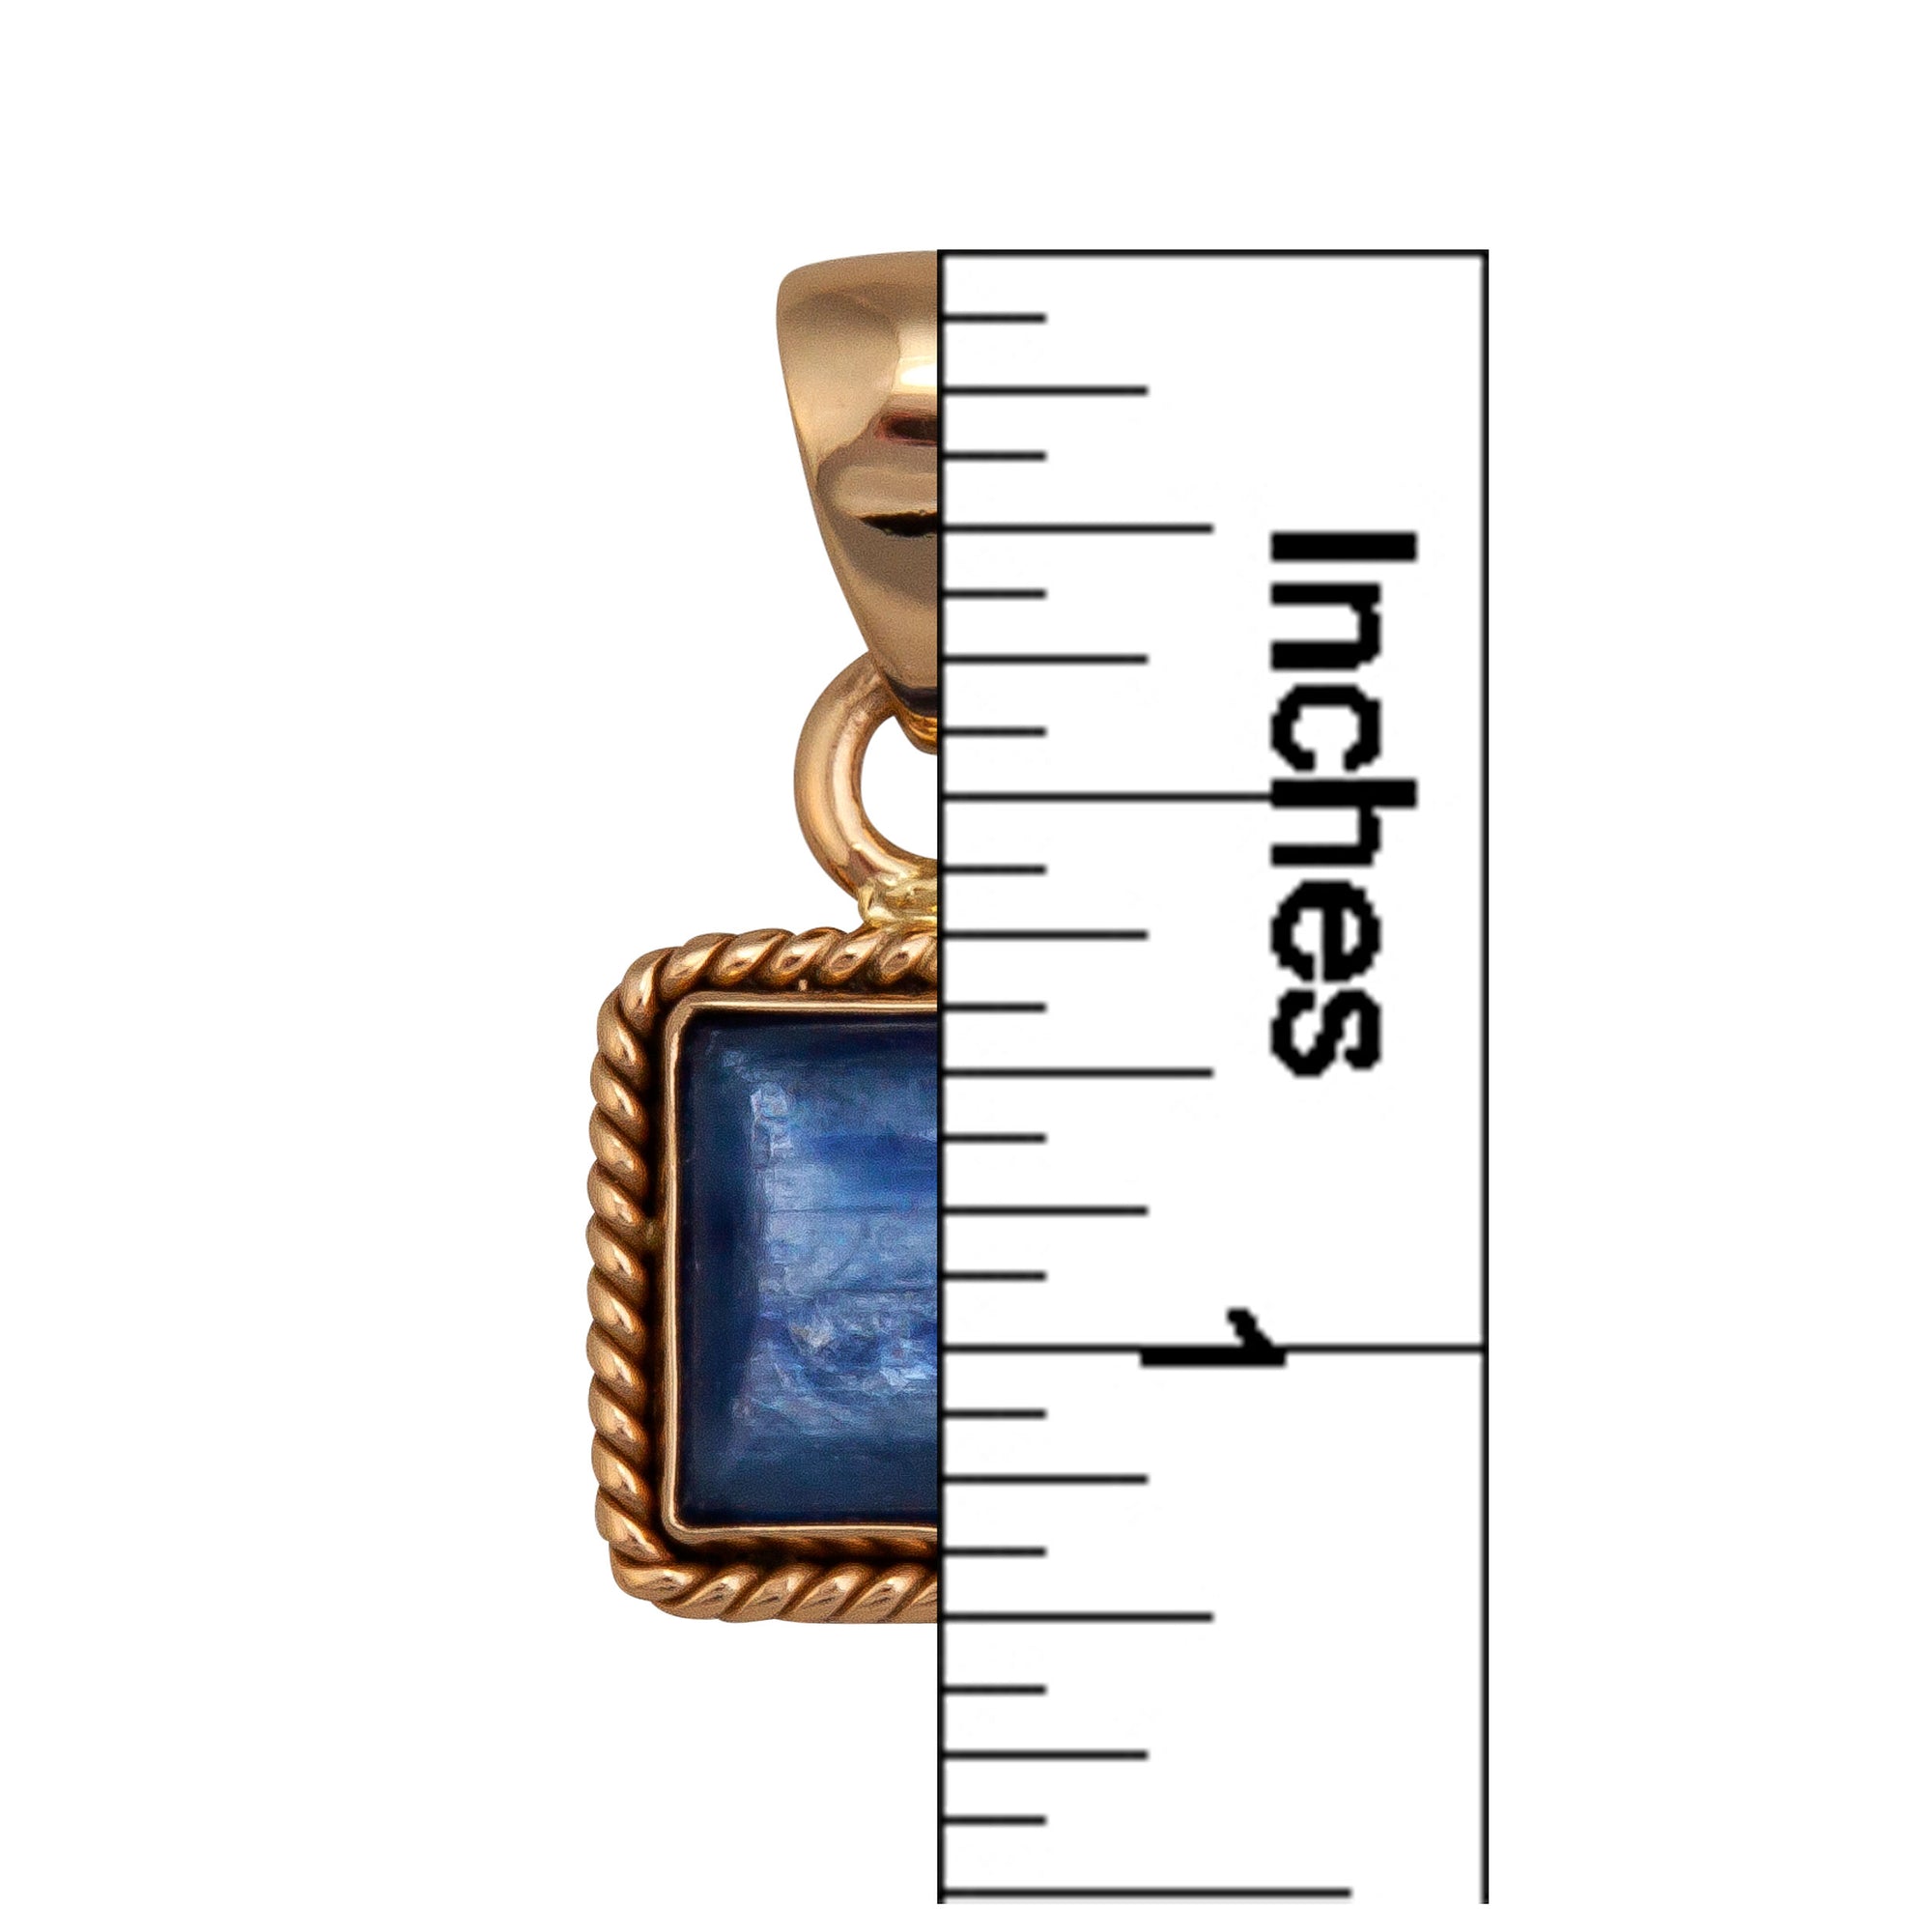 Charles Albert Jewelry - Alchemia Kyanite Square Pendant with Rope Edge - Measurements